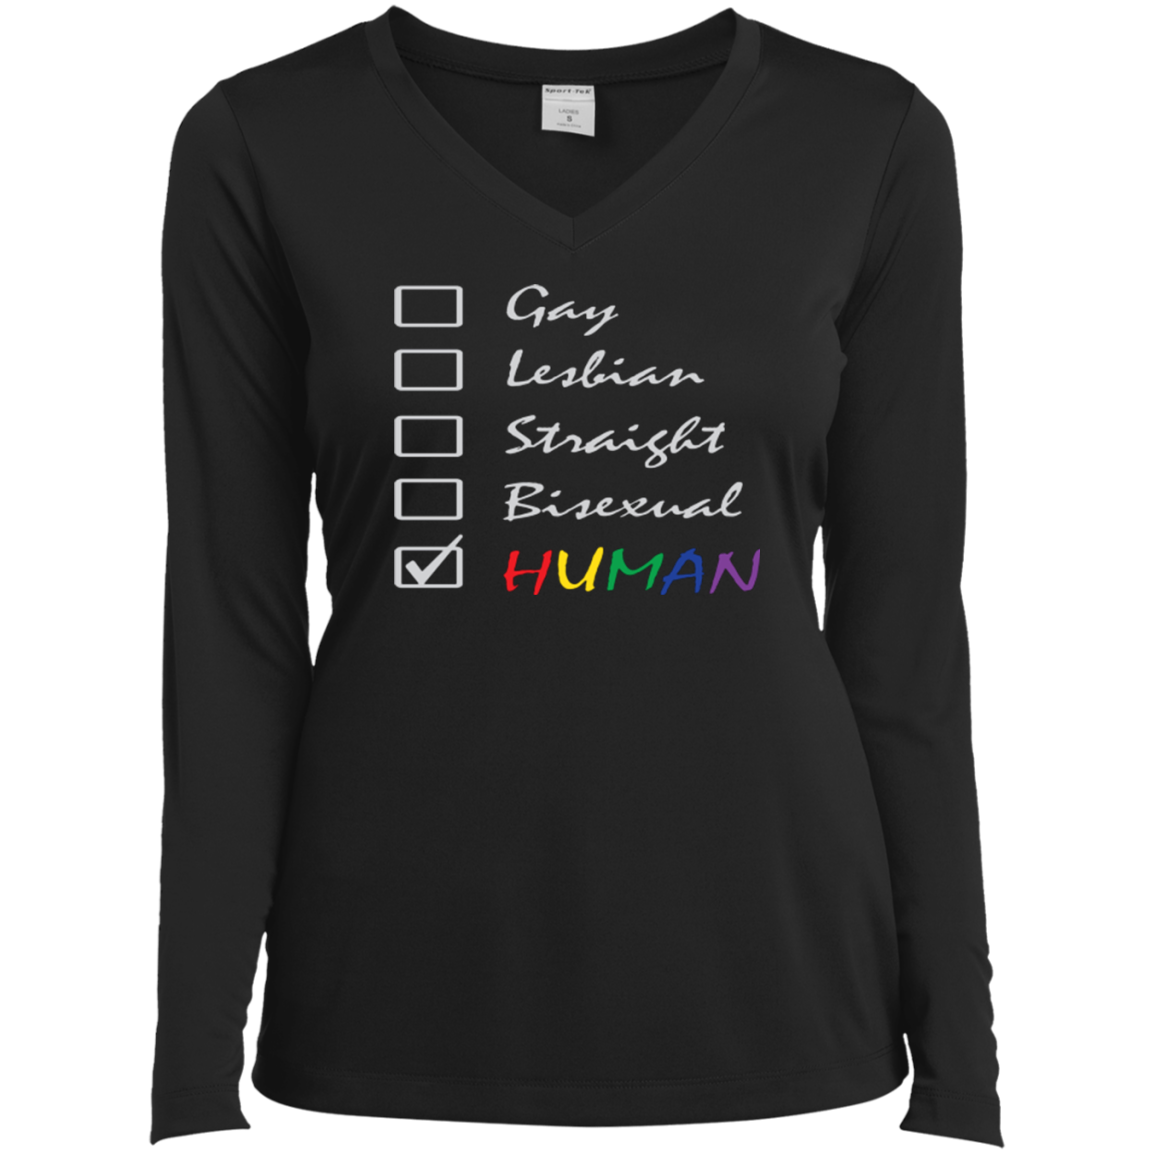 Human Check Box LGBT Pride black full sleeves v-neck T Shirt for Women Human Equality LGBT Pride black full sleeves v-neck Tshirt for Women